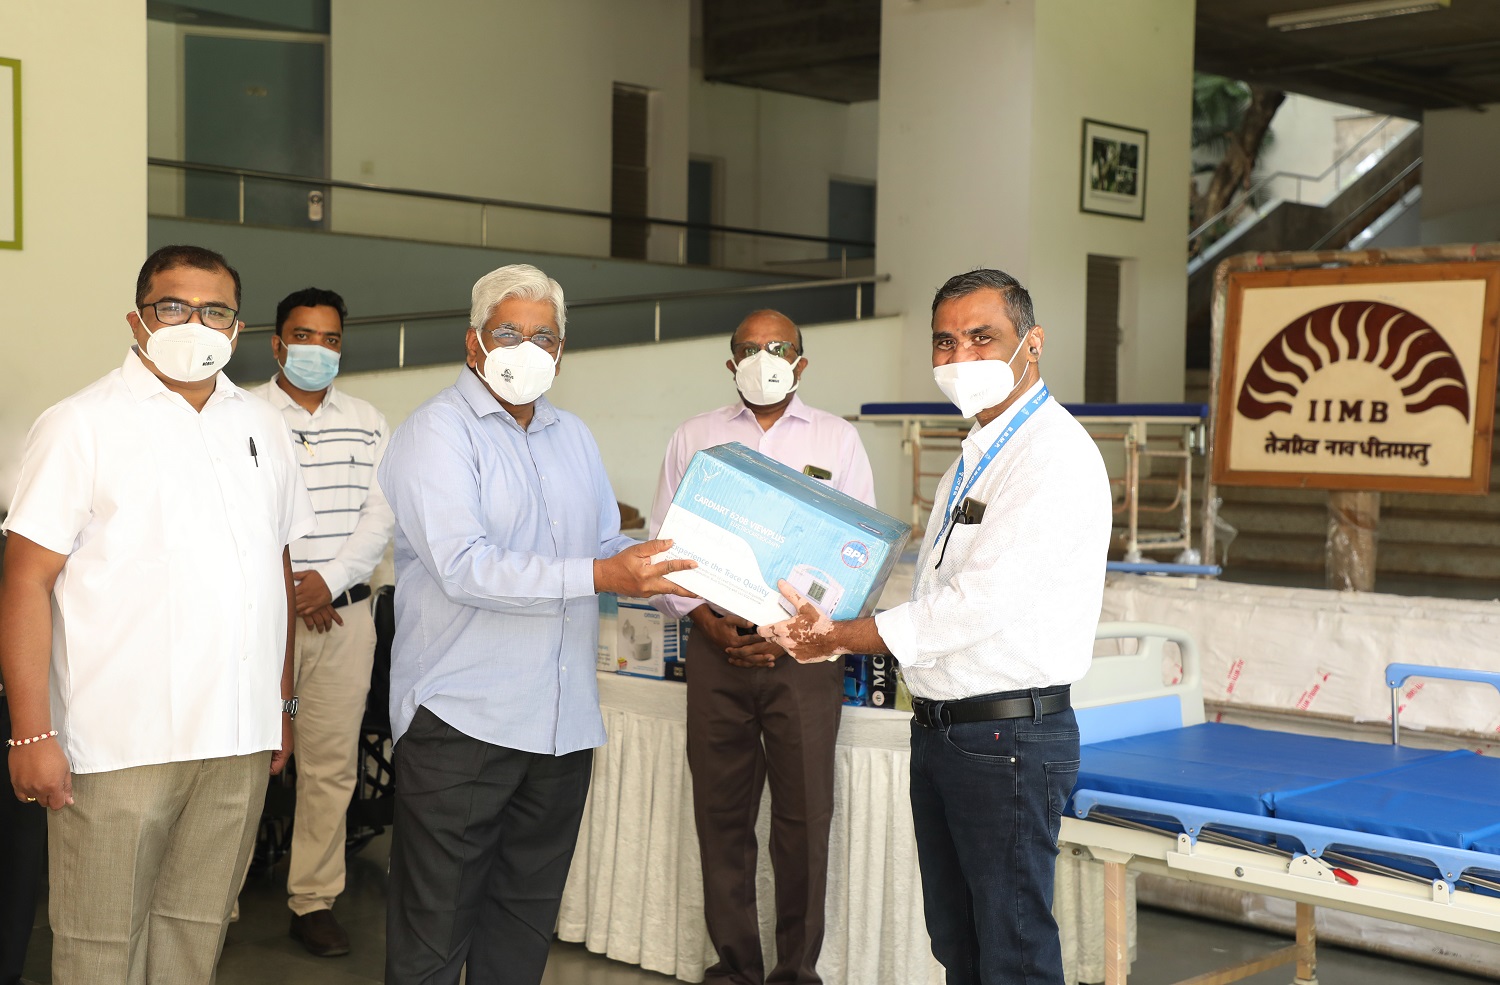 Professor Rajendra K Bandi, Dean (Administration), IIMB, hands over medical supplies to Dr Krishnappa B K, Senior Medical Officer, Kodichikkanahalli PHC, as part of the Institute’s CSR activity, on January 20, 2022. (L-R) Dr. Ravikumar K R, Resident Medical Officer, IIMB; Manjunatha K G, Nurse, Health Centre, IIMB; Prof. Rajendra K Bandi; Col. (Retd.) S D Aravendan, Chief Administrative Officer, IIMB, and Dr Krishnappa B K.